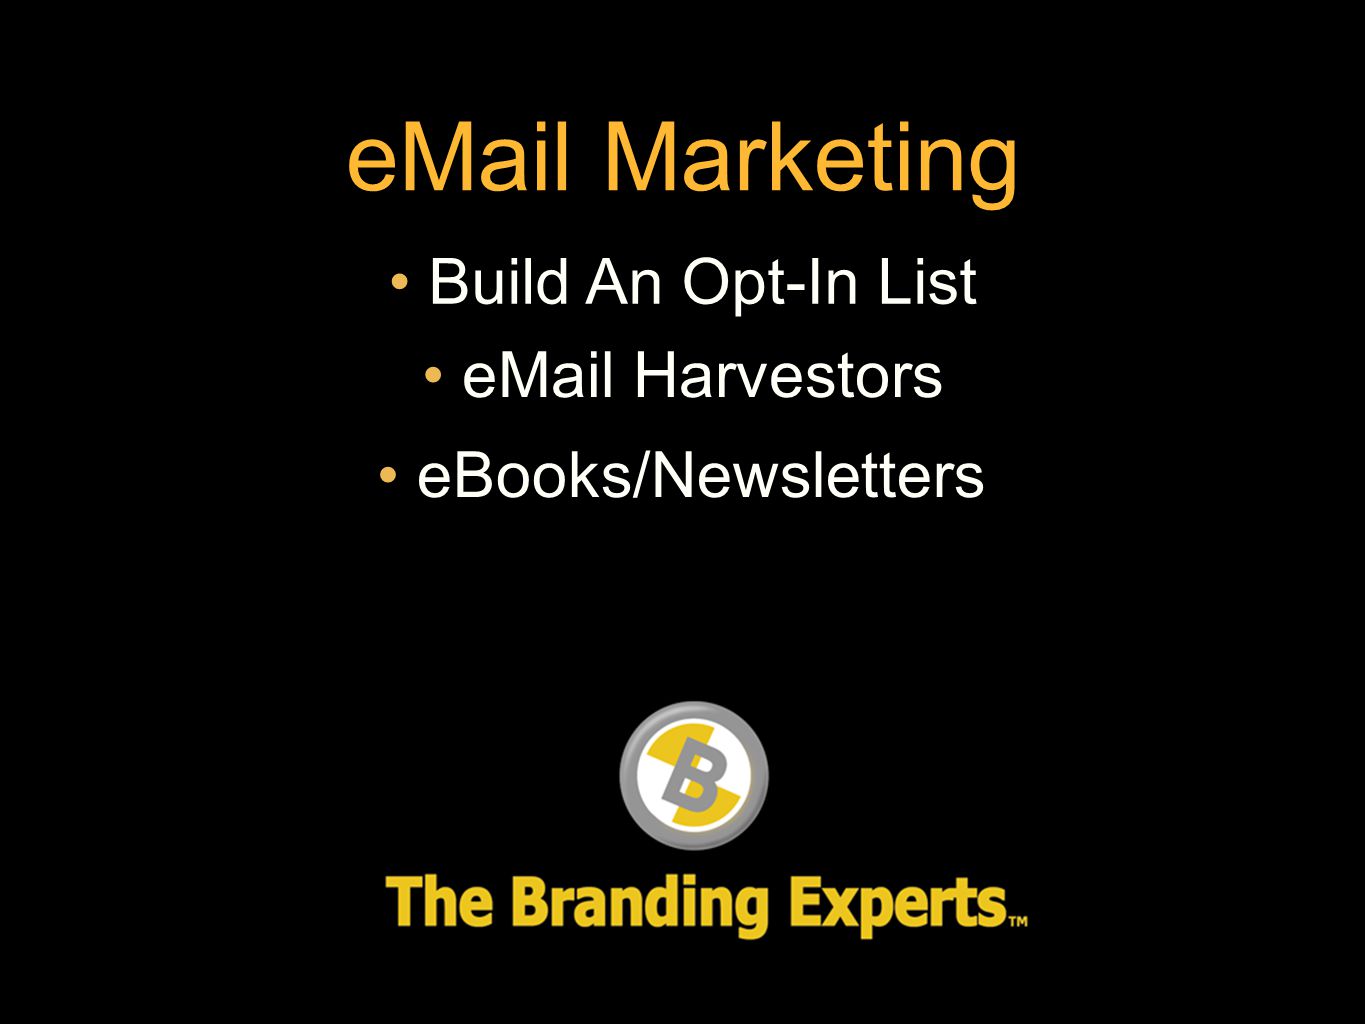 Marketing Build An Opt-In List eBooks/Newsletters  Harvestors